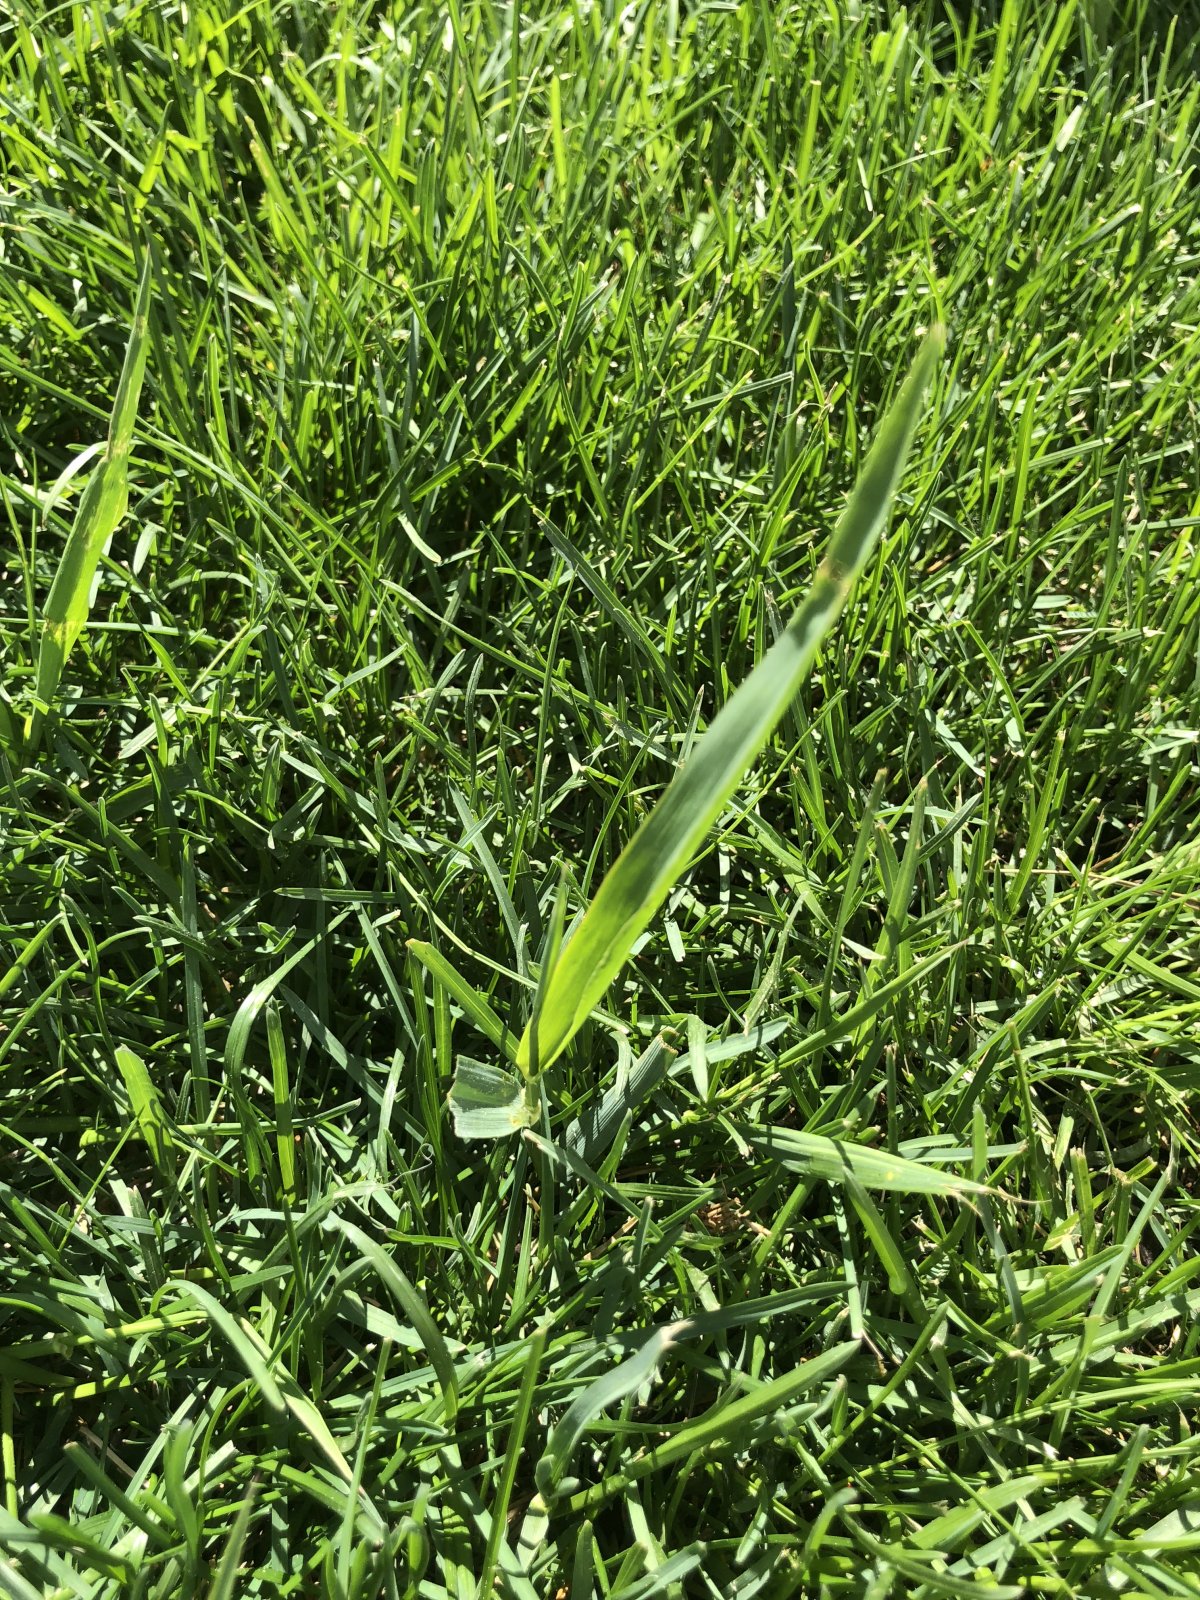 Grassy weed identification help!